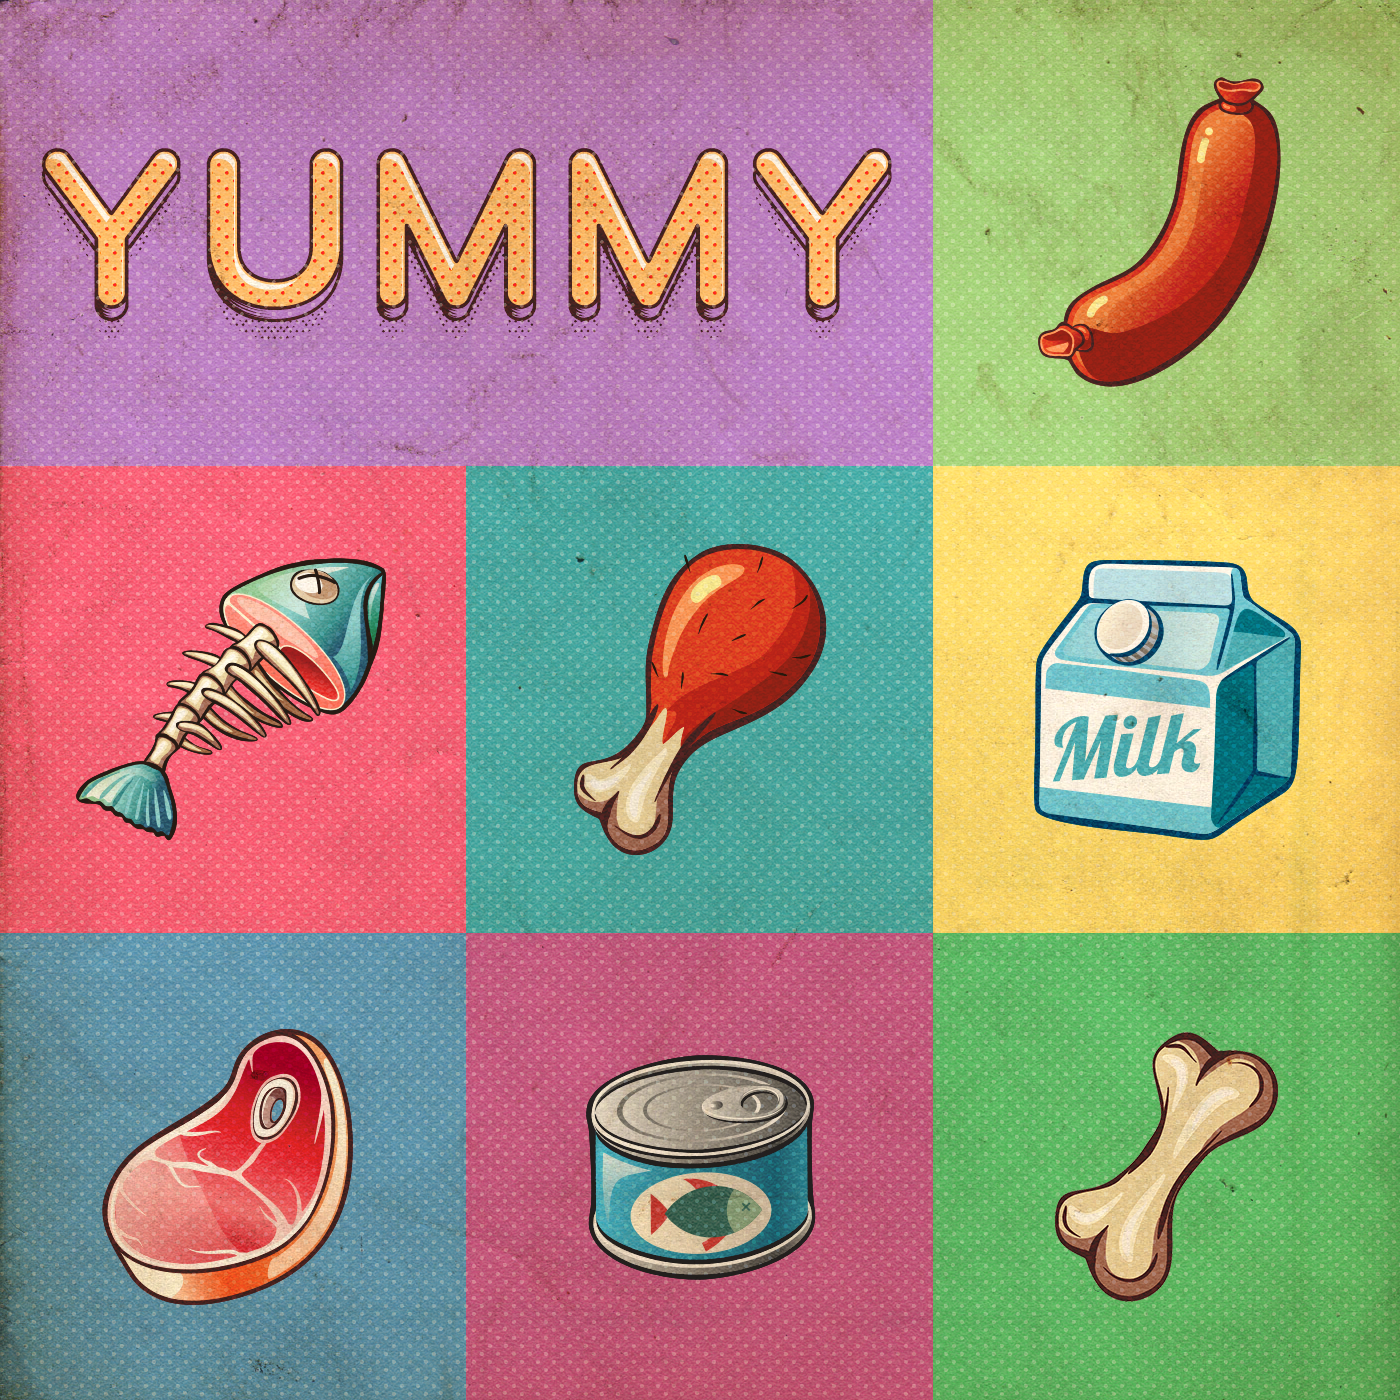 yummy yammy icons Food  pattern gif game ILLUSTRATION  art vector